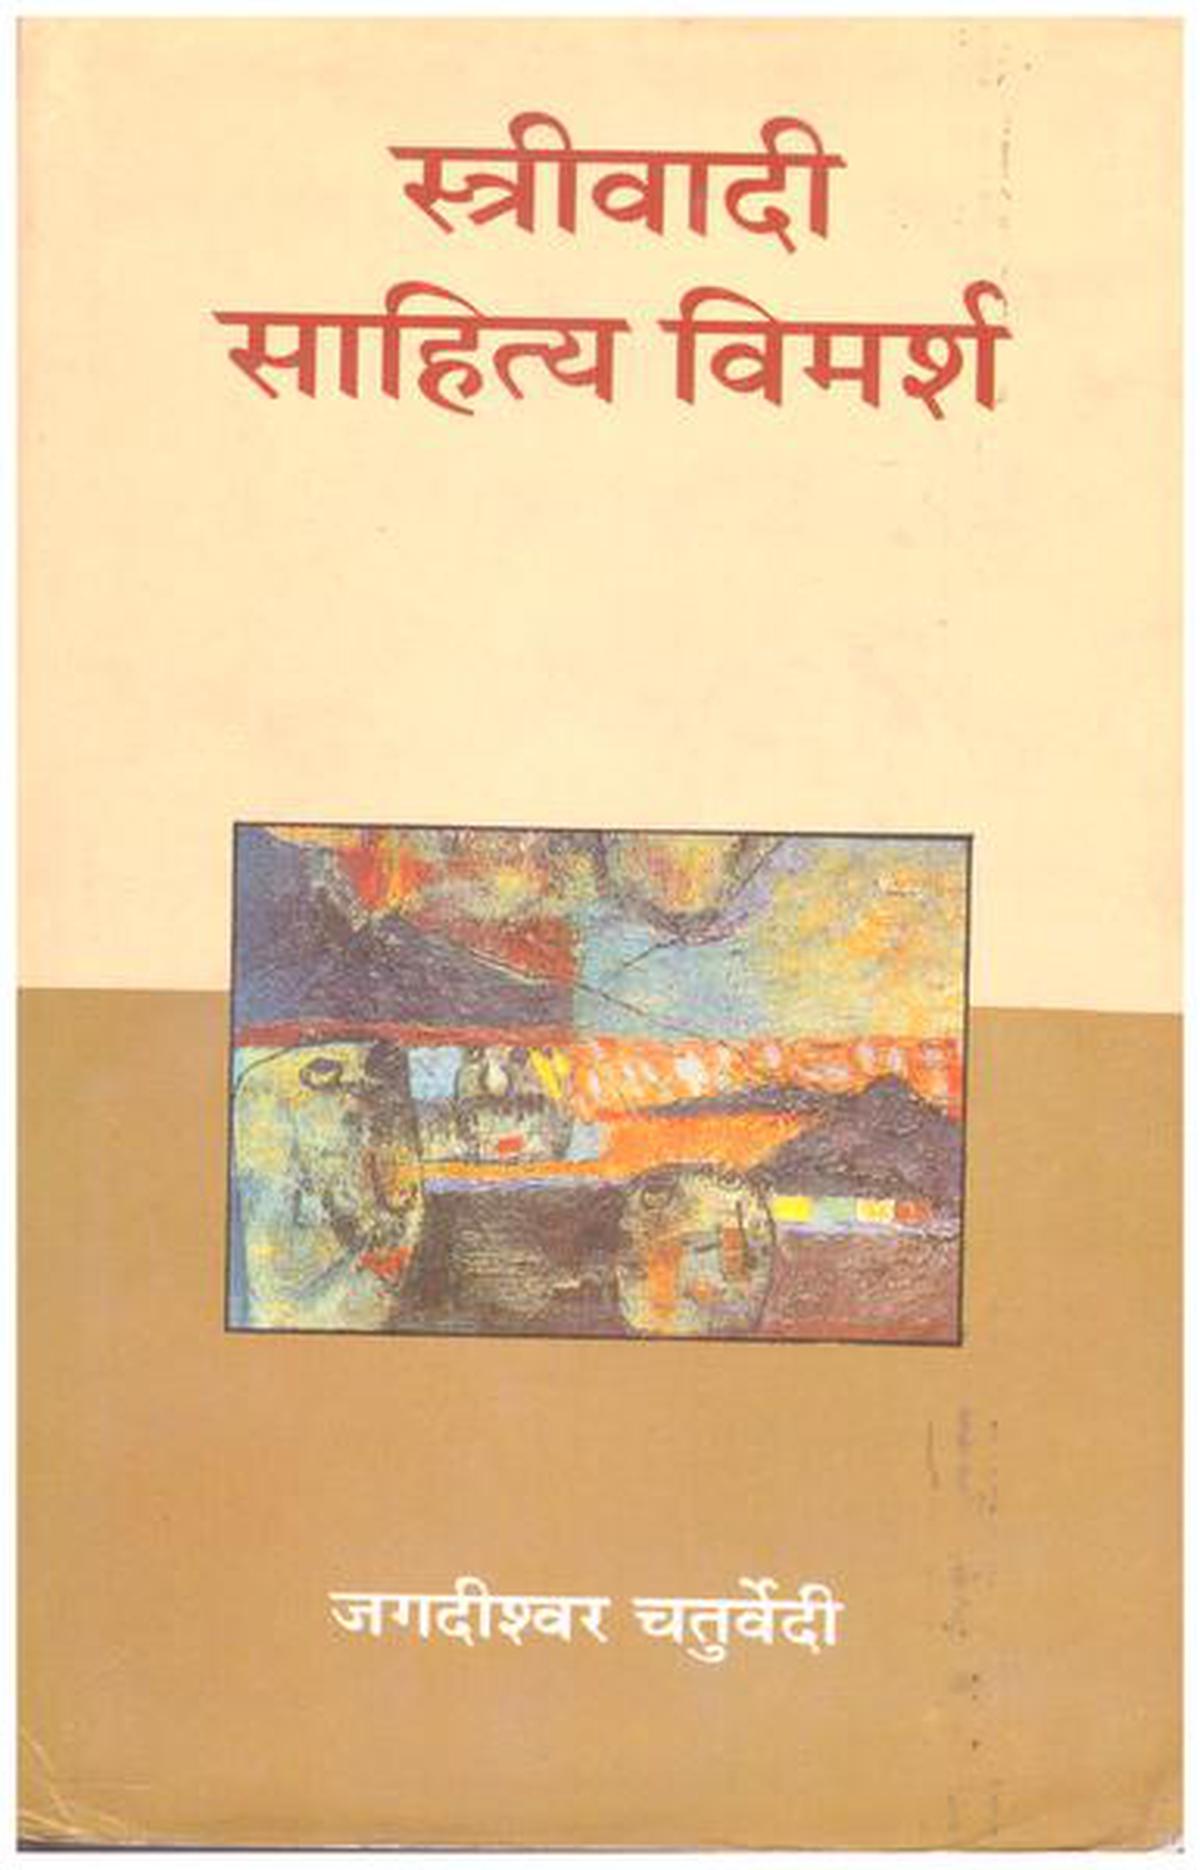 ‘Streevadi Sahitya Vimarsh’ (Feminist Literary Discourse) published by retired Hindi professor Jagadishwar Chaturvedi in 2000.